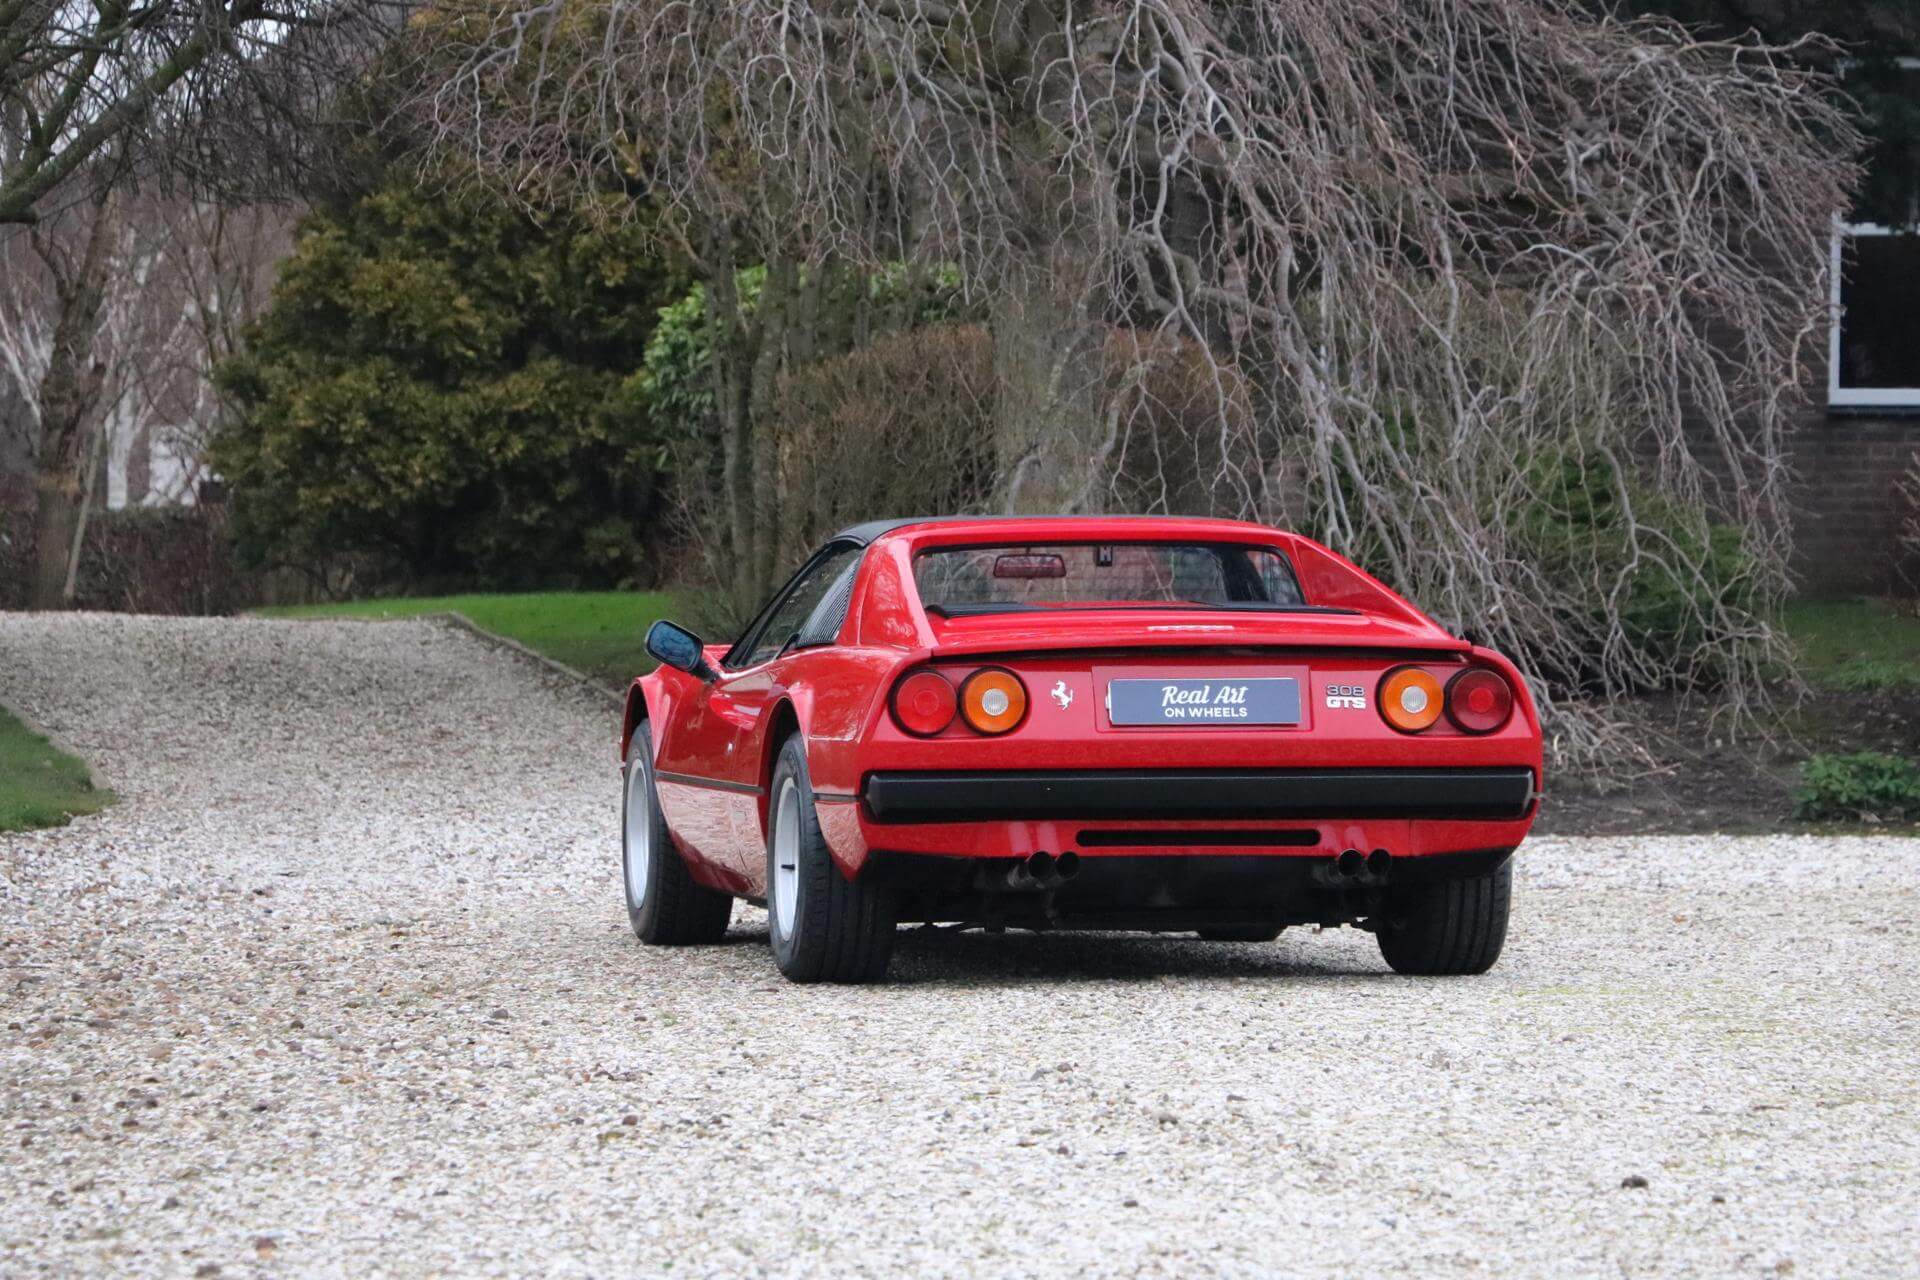 Real Art on Wheels | Ferrari 308 GTS